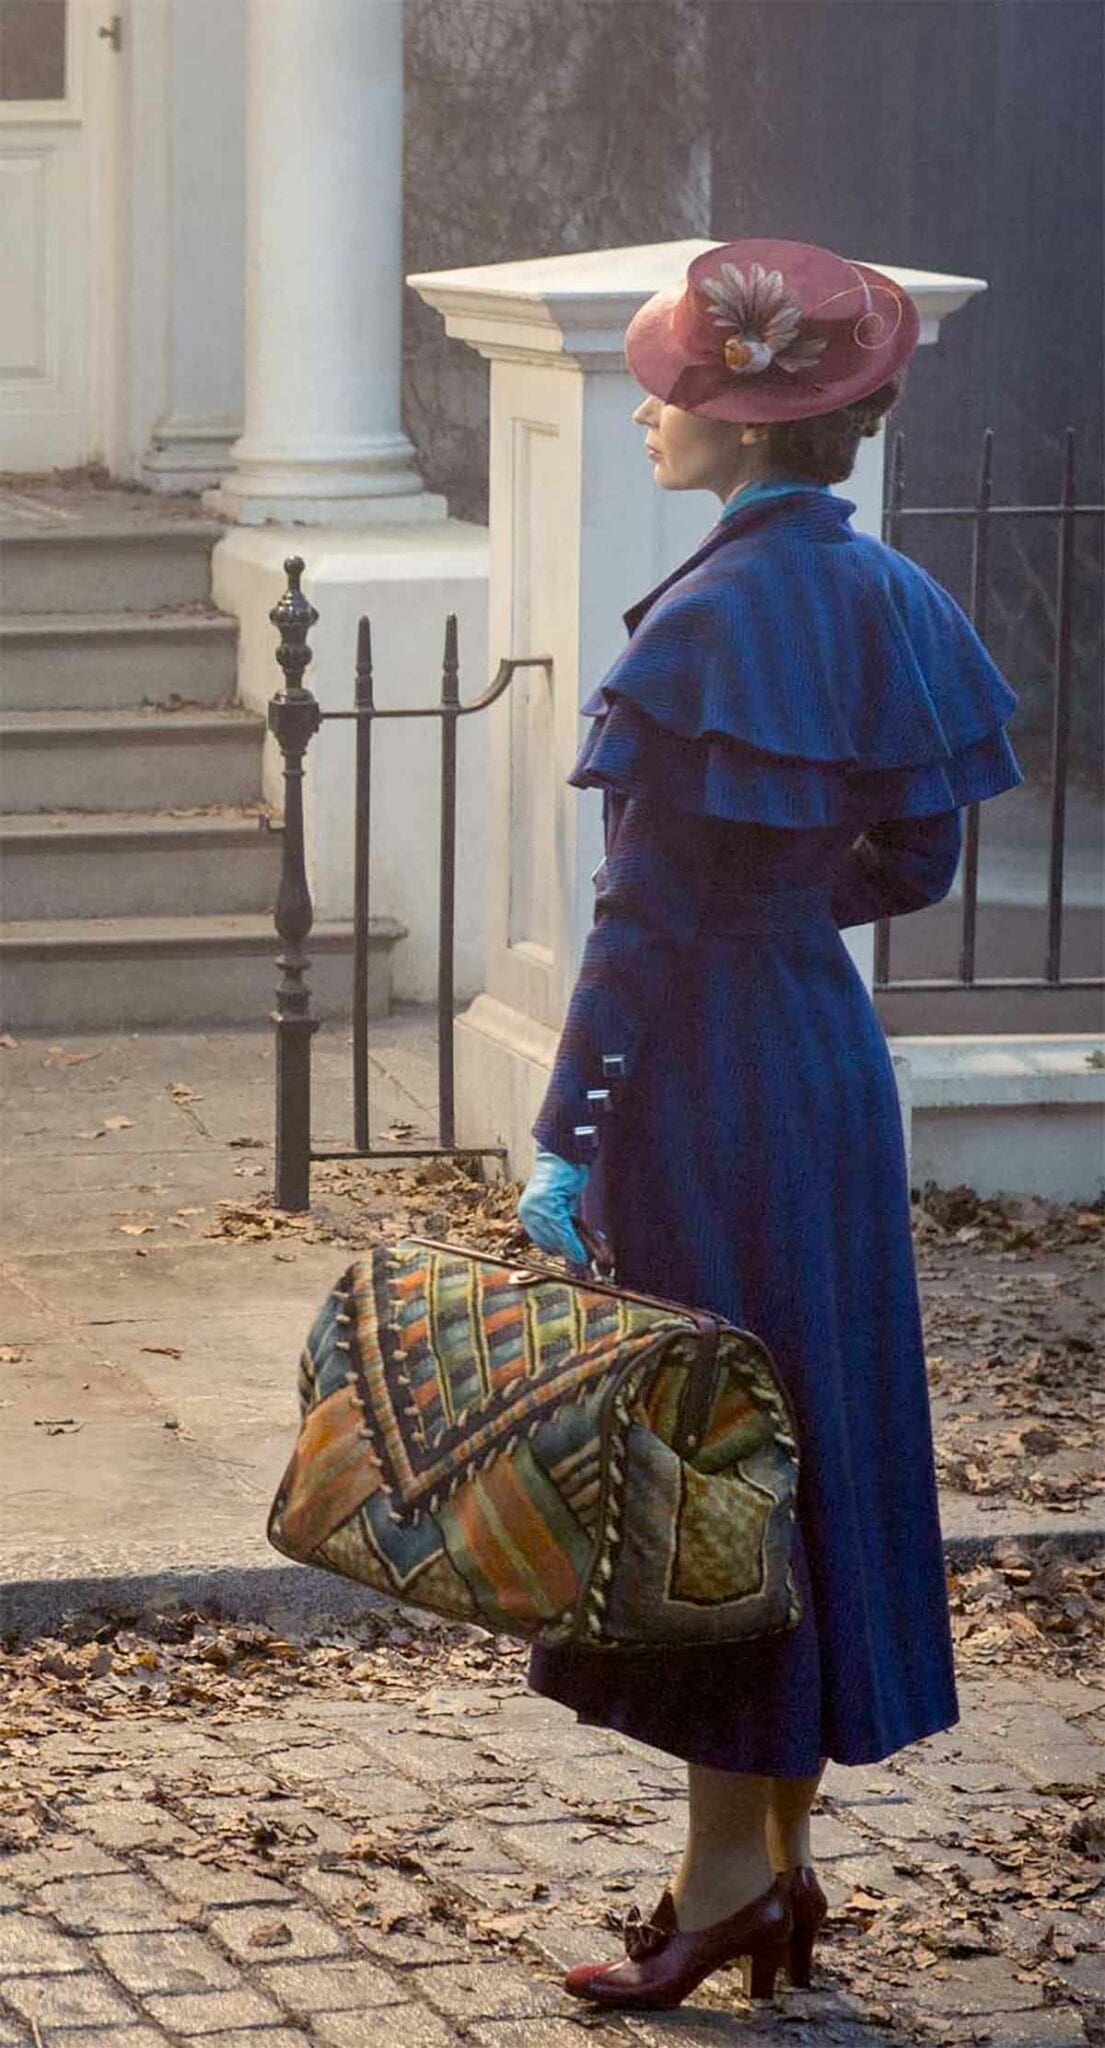 Mary Poppins Returns'ten Emily Blunt'lı İlk Fotoğraf